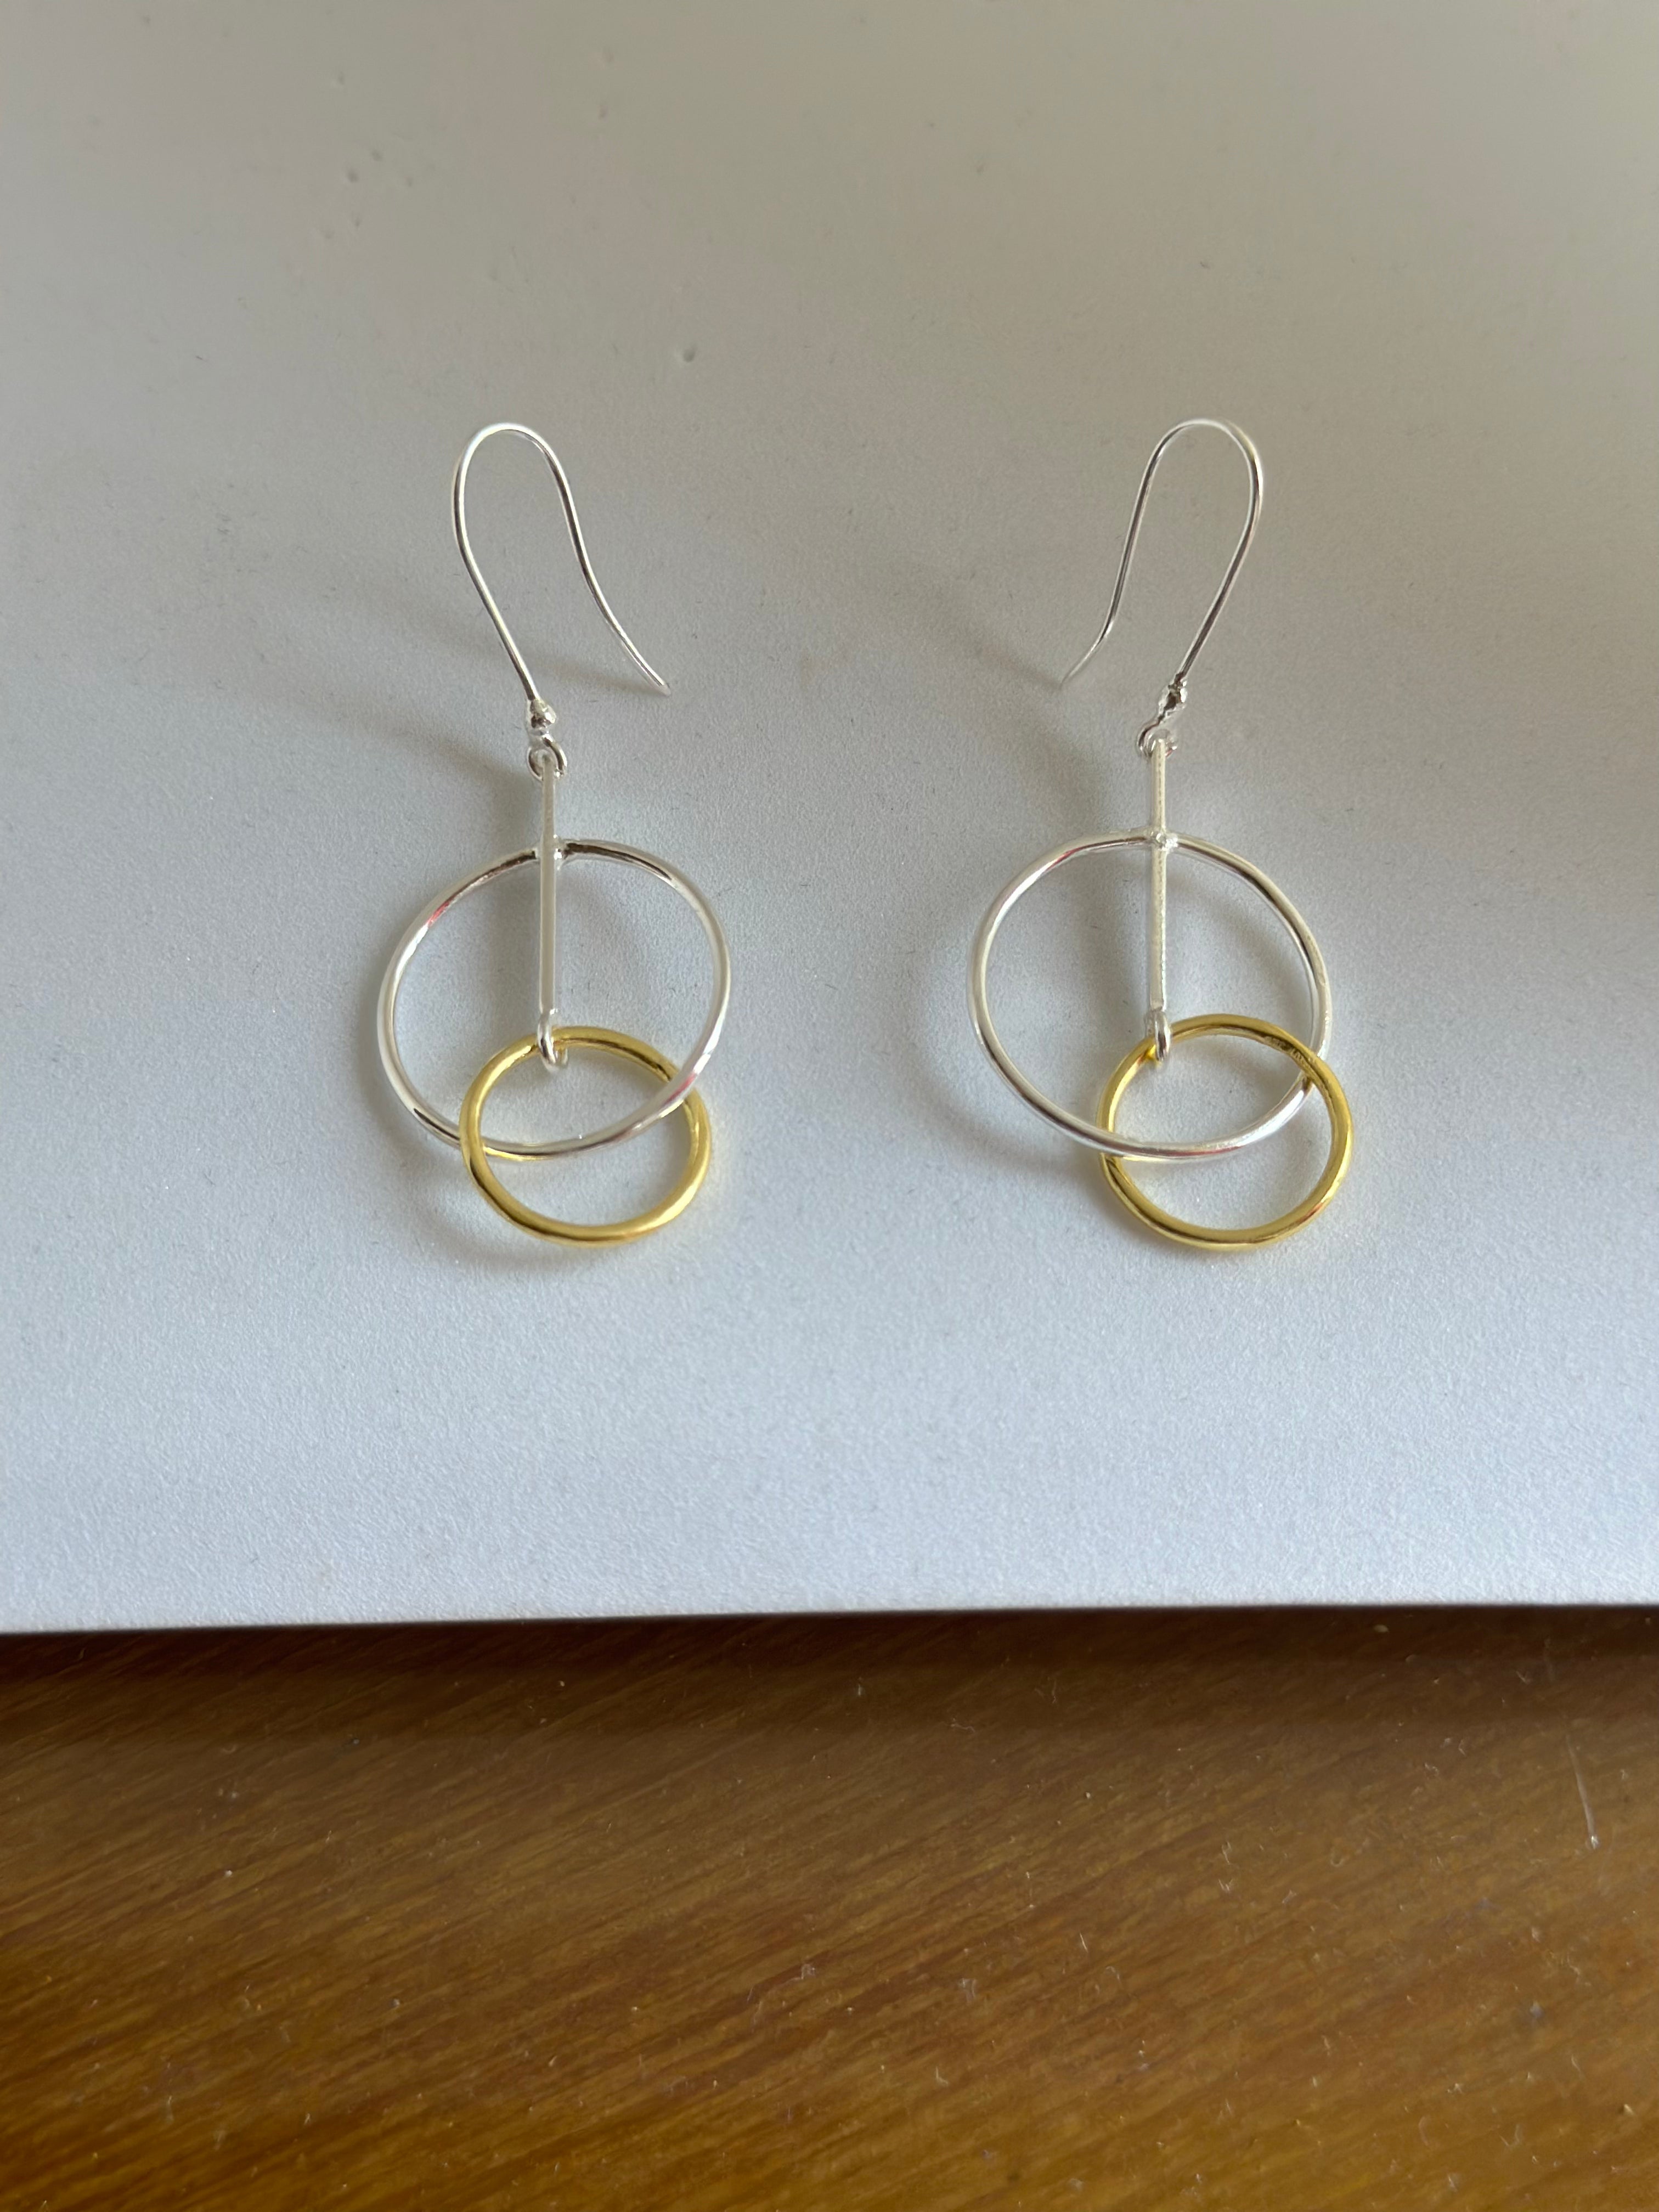 92.5 silver Geometric design Earring in 2 tone